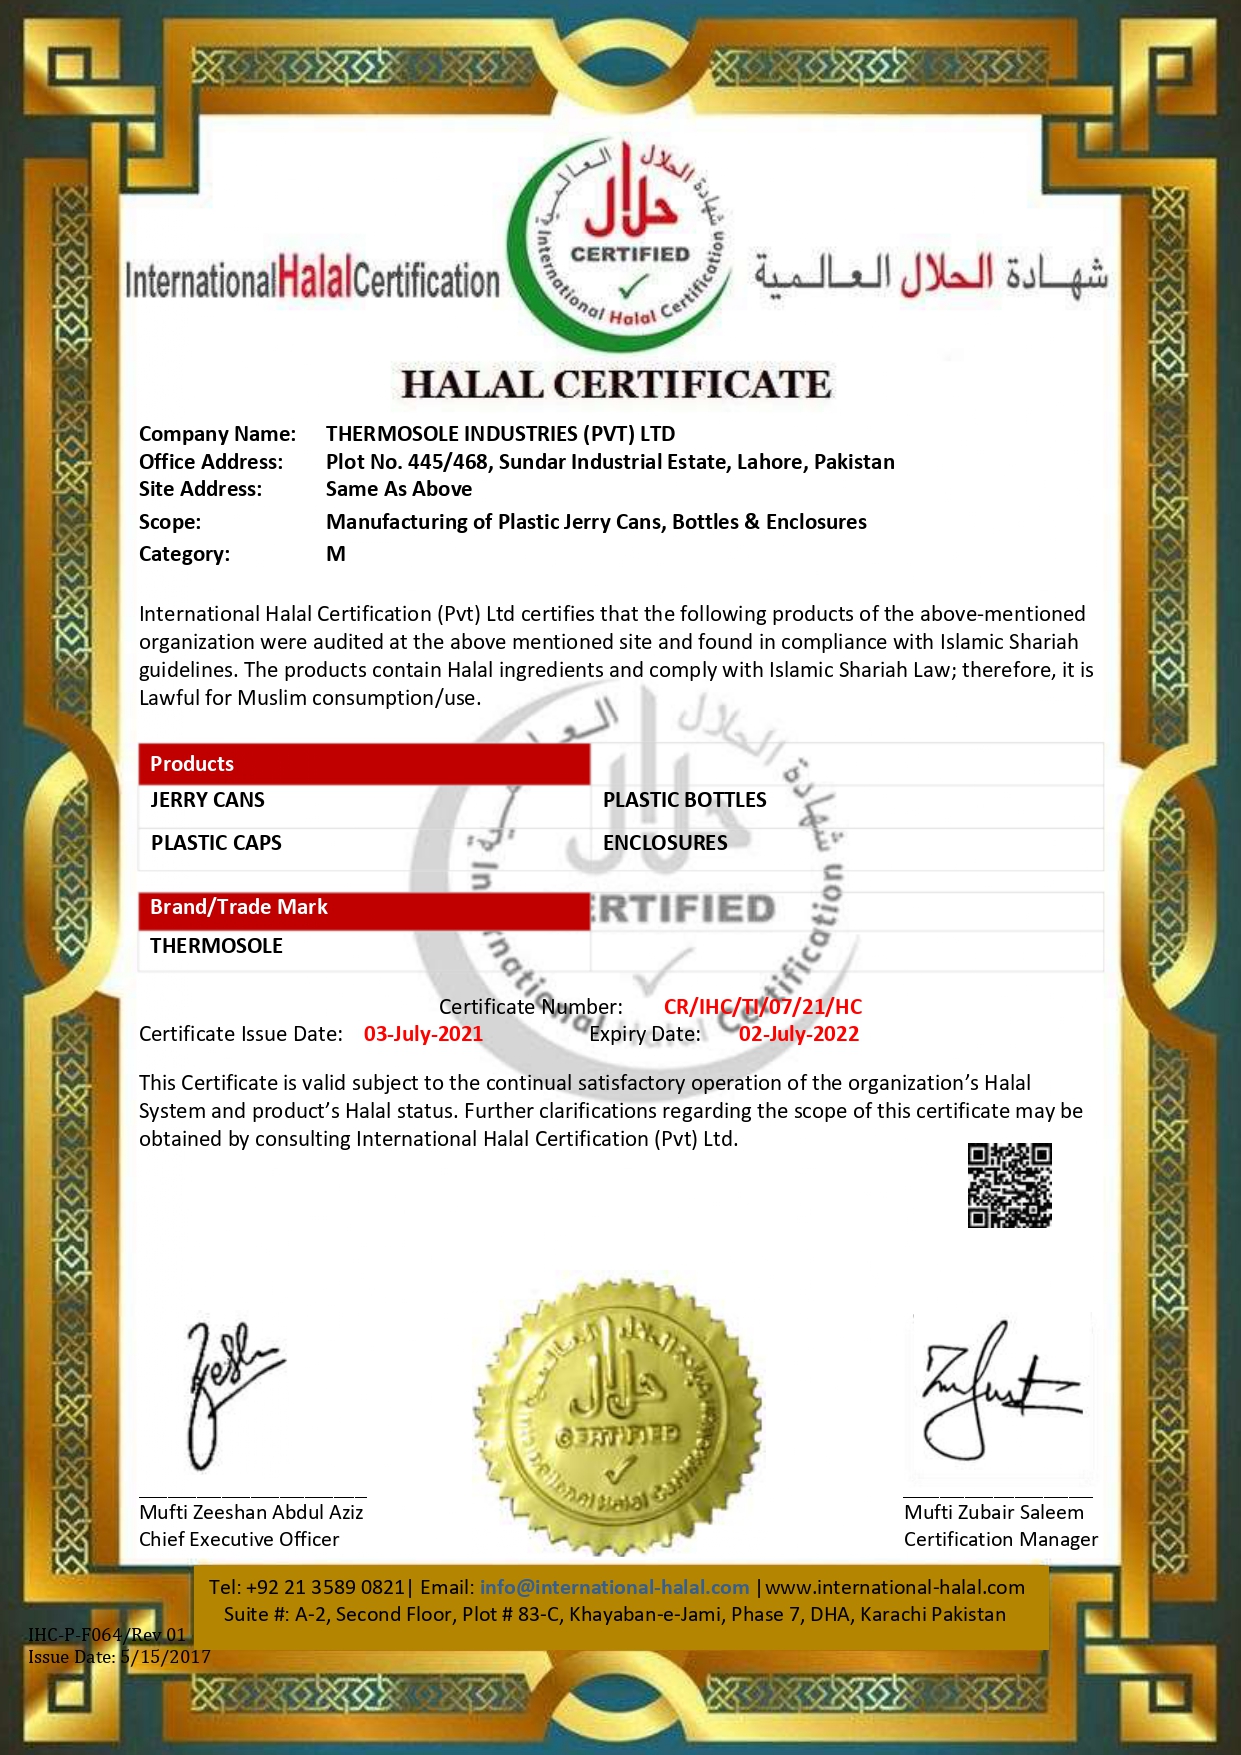 IHC Halal Certificate